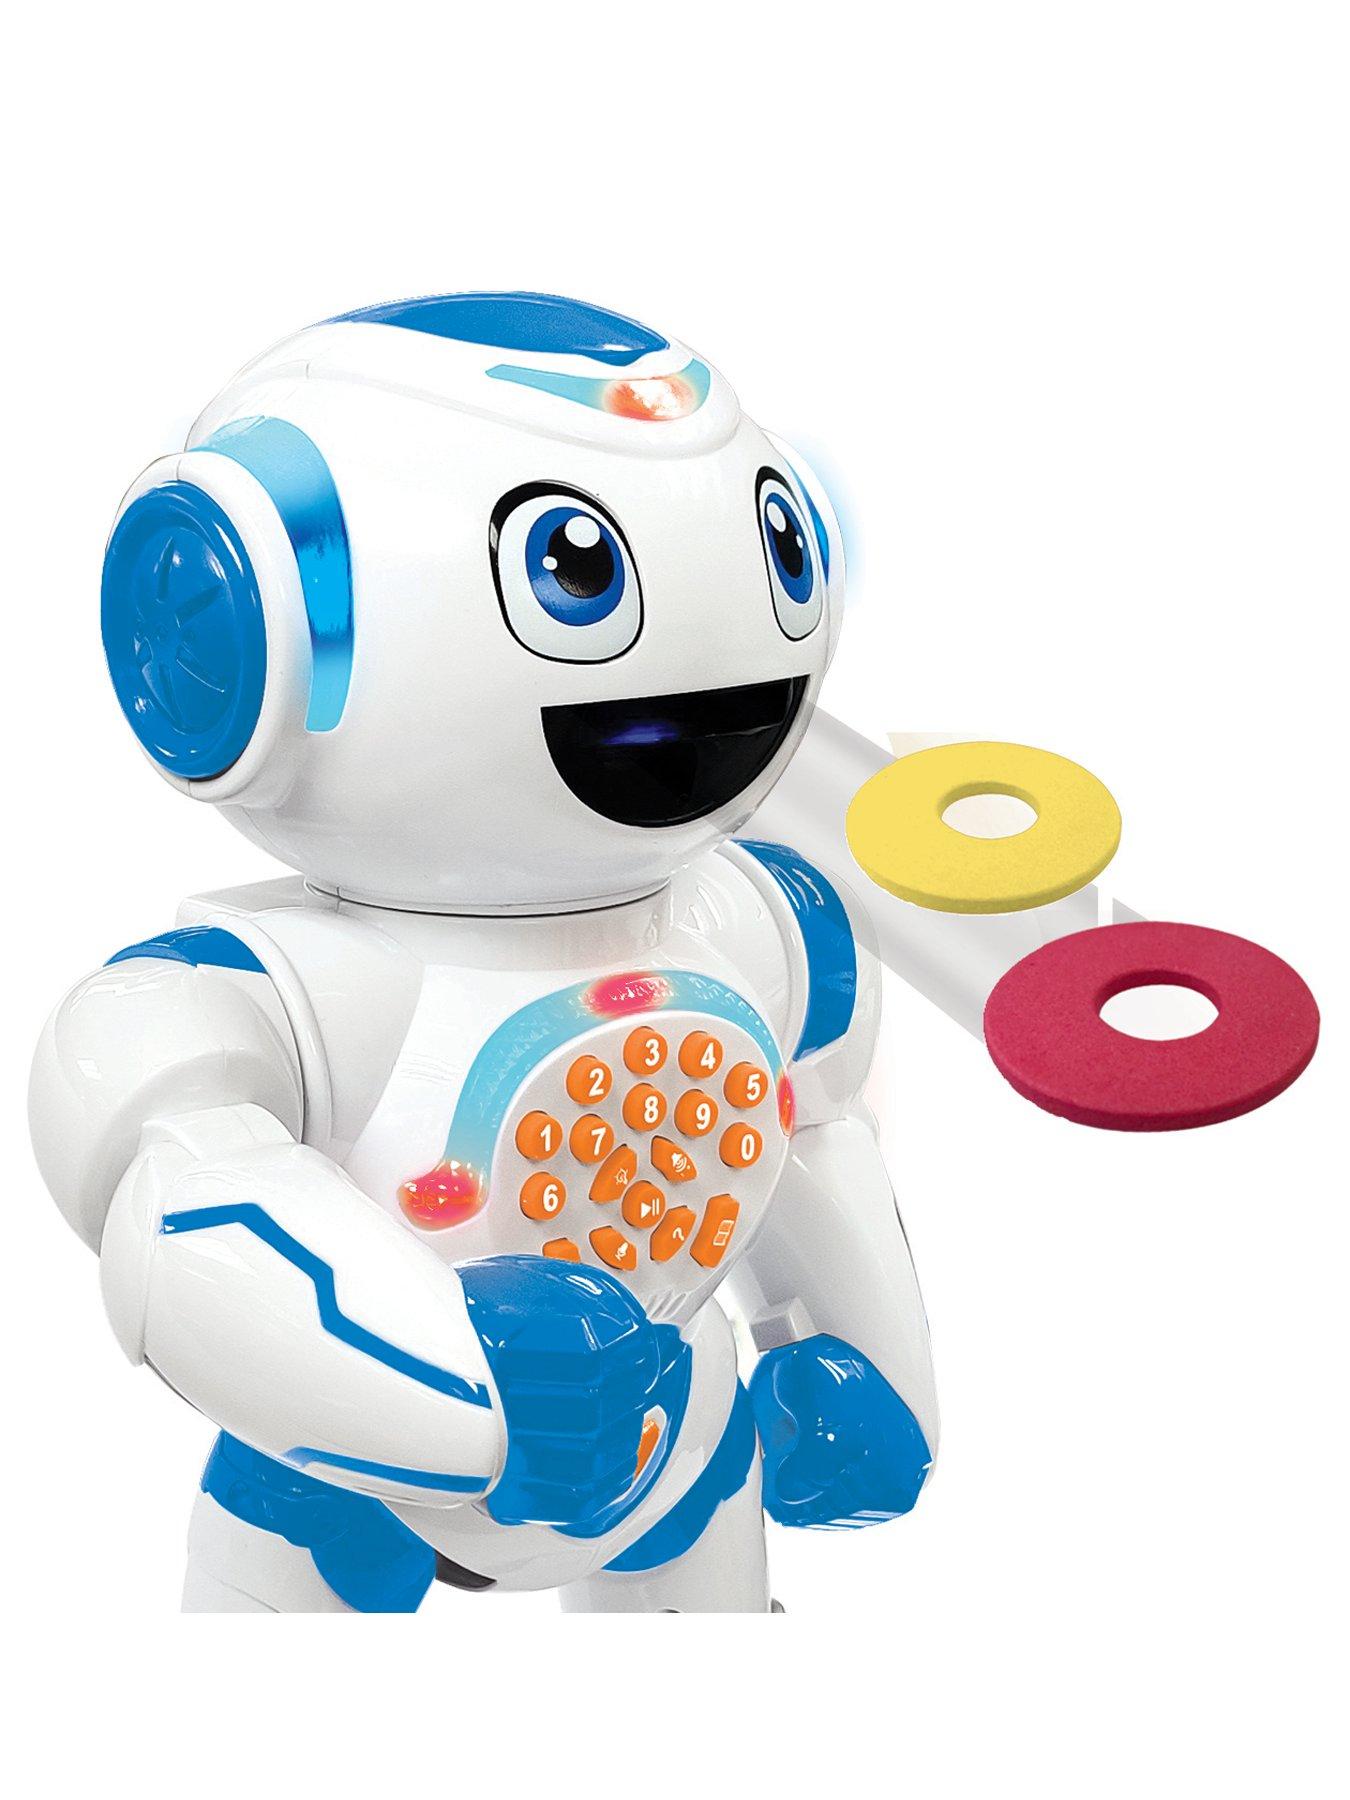 Lexibook - POWERMAN® FIRST Talking Robot Learning Toy to Help Kids Grow Up  (English) 